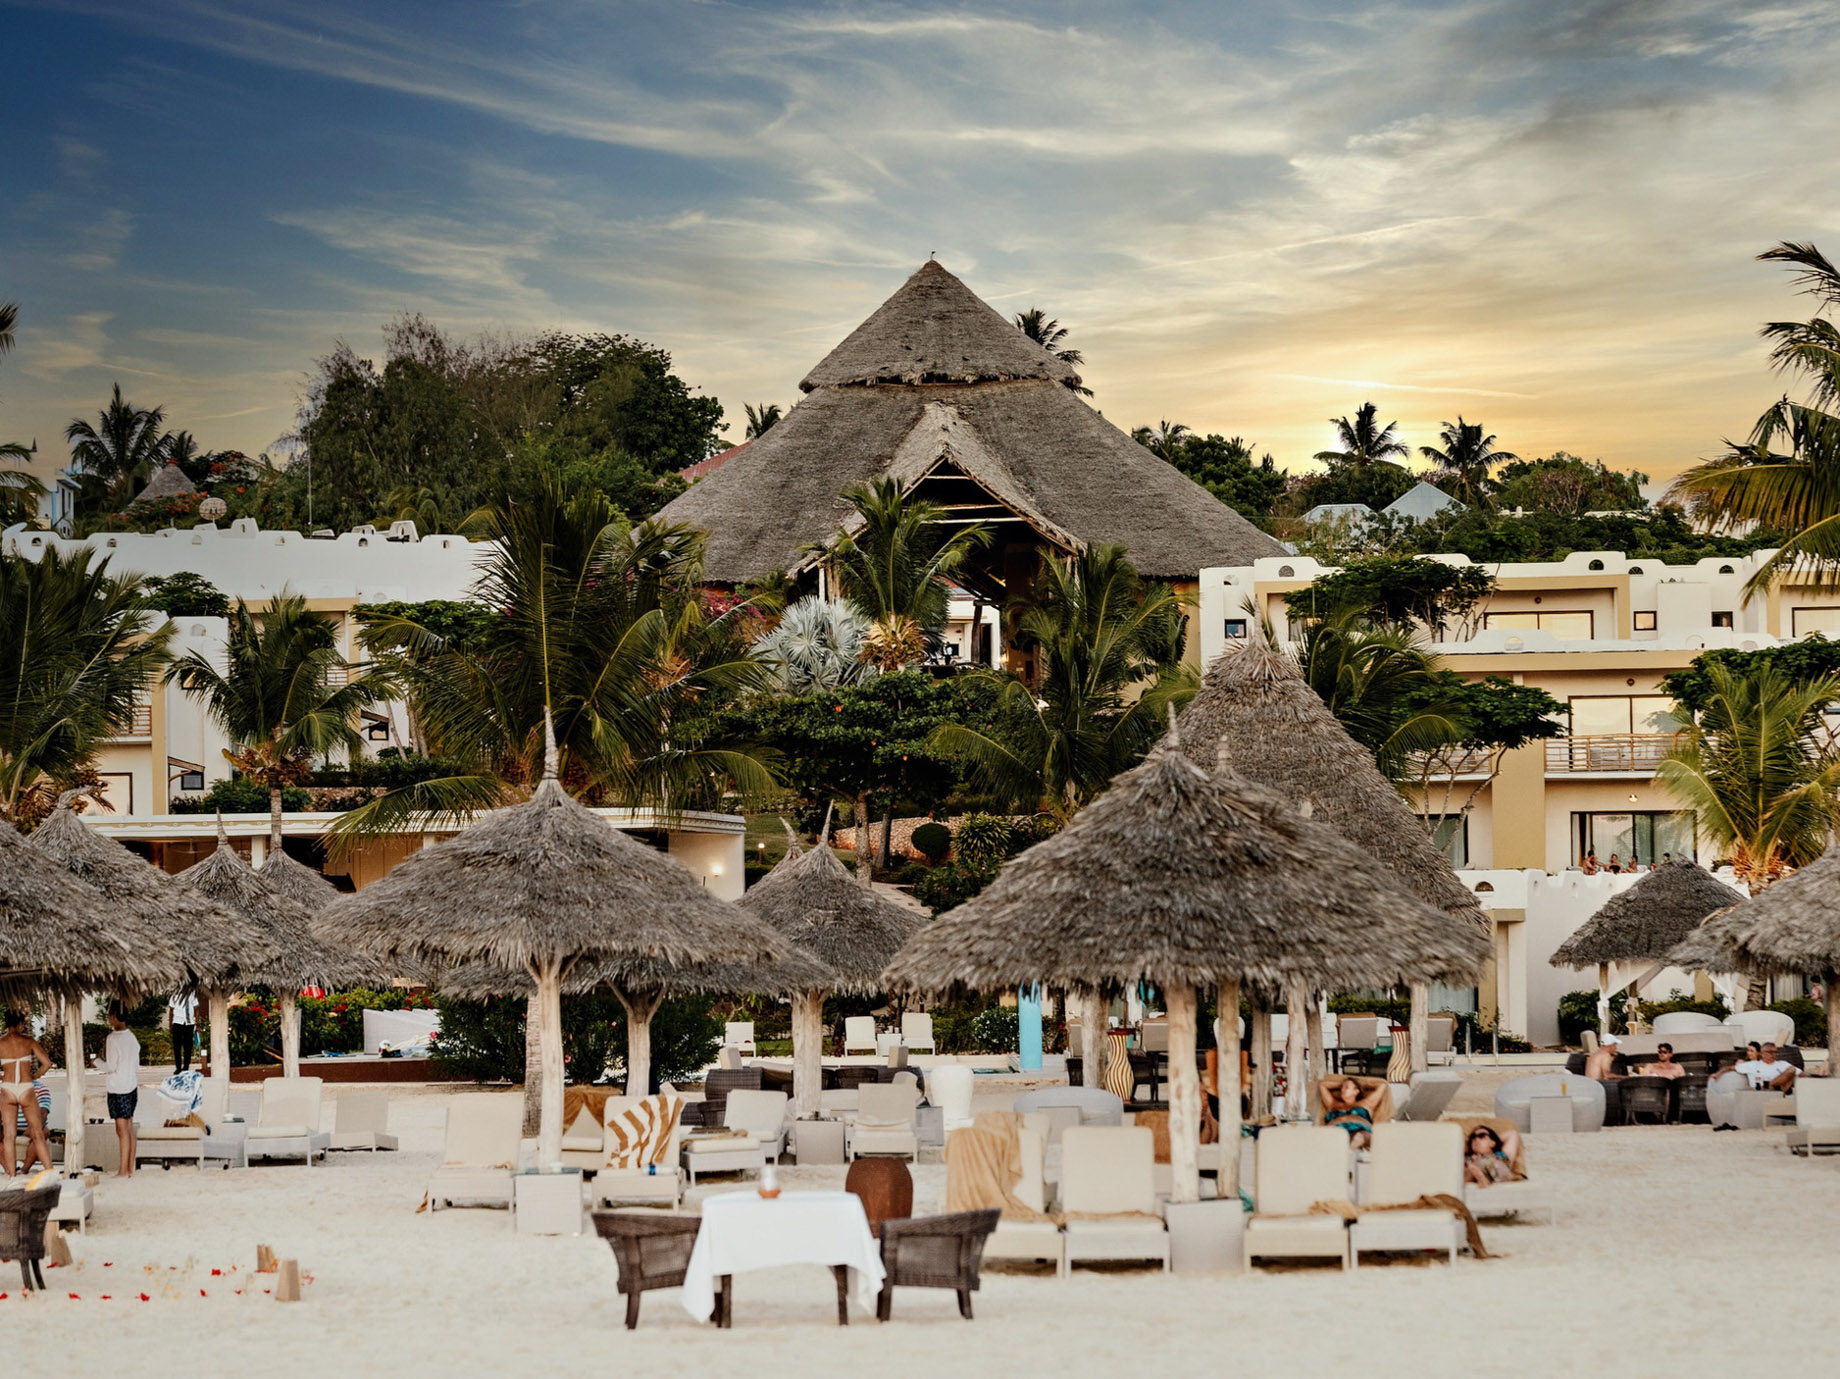 Gold Zanzibar Beach House And Spa Resort Nungwi Zanzibar Tanzania Resort Beach View Travoh 